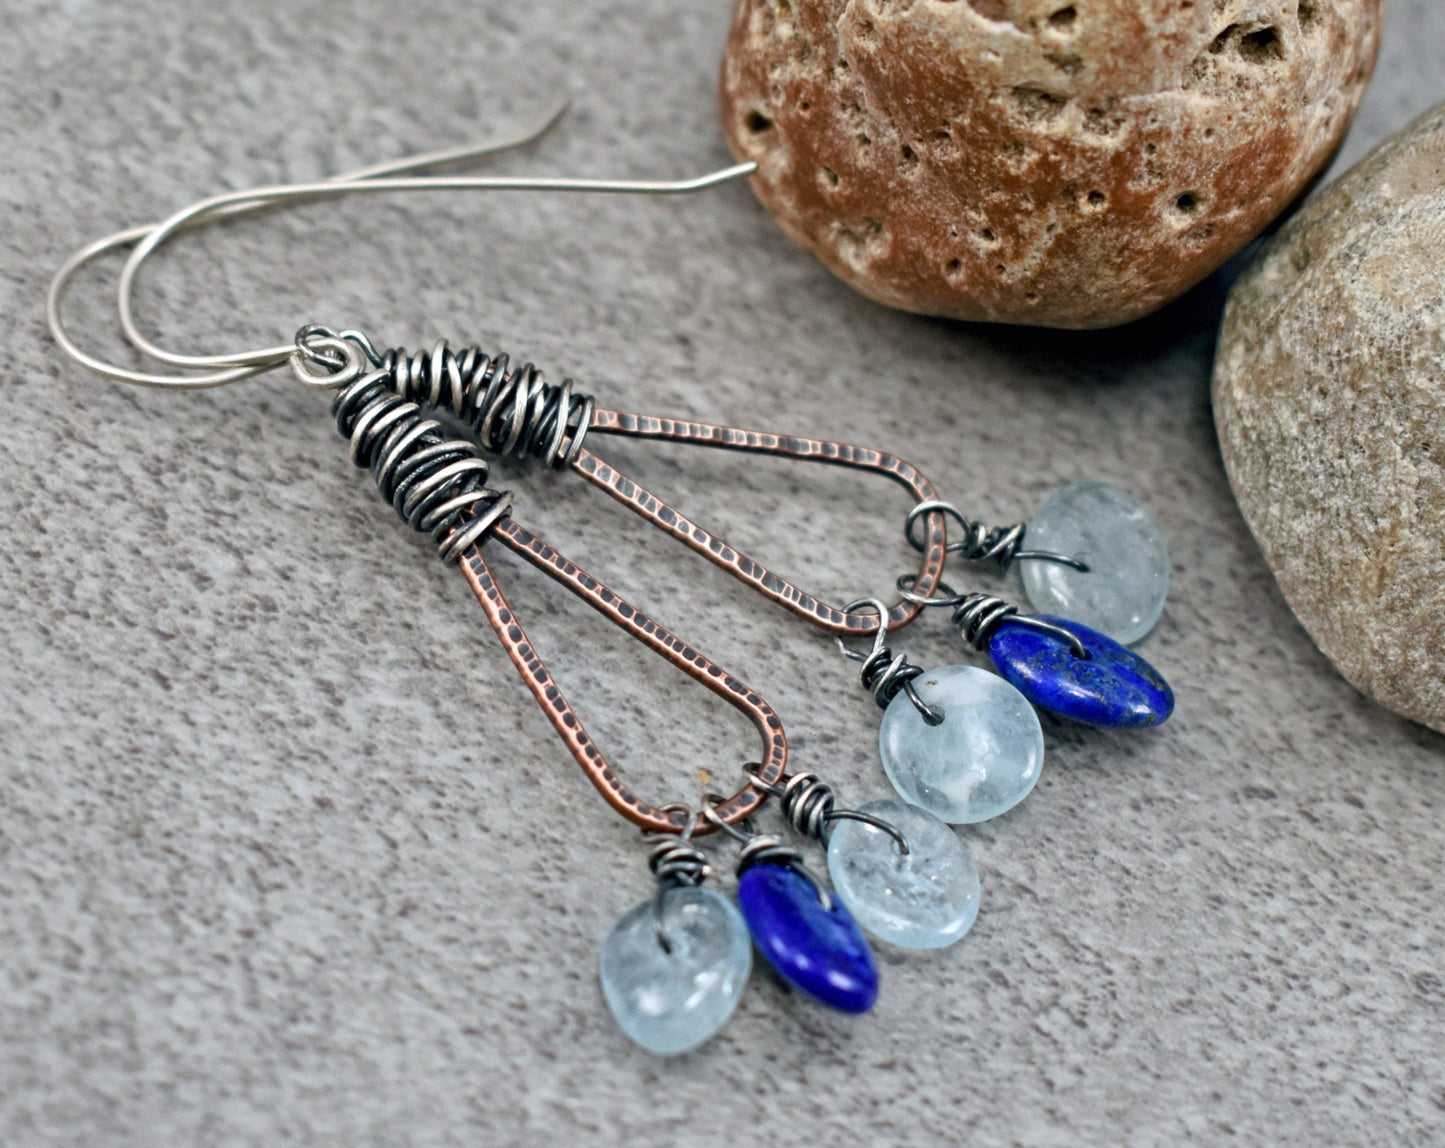 Aquamarine Mixed Metal Earrings, Lapis Lazuli Boho Triangle Jewelry Handmade, Rustic Blue, Unique Copper Sterling Silver Dangles